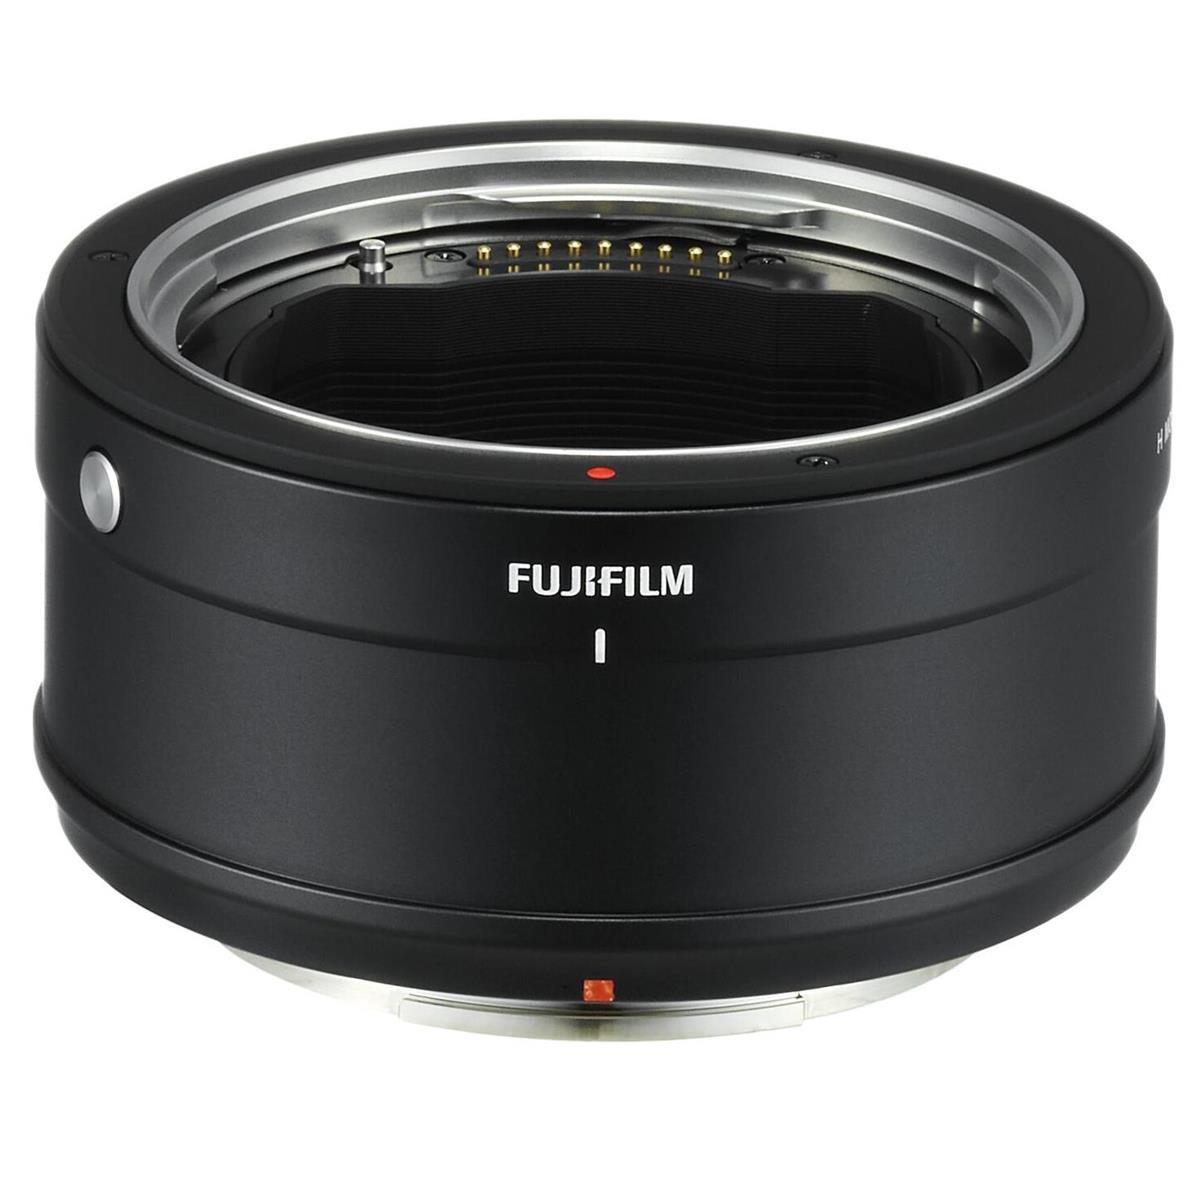 Fujifilm Gfx H Mount Adapter G